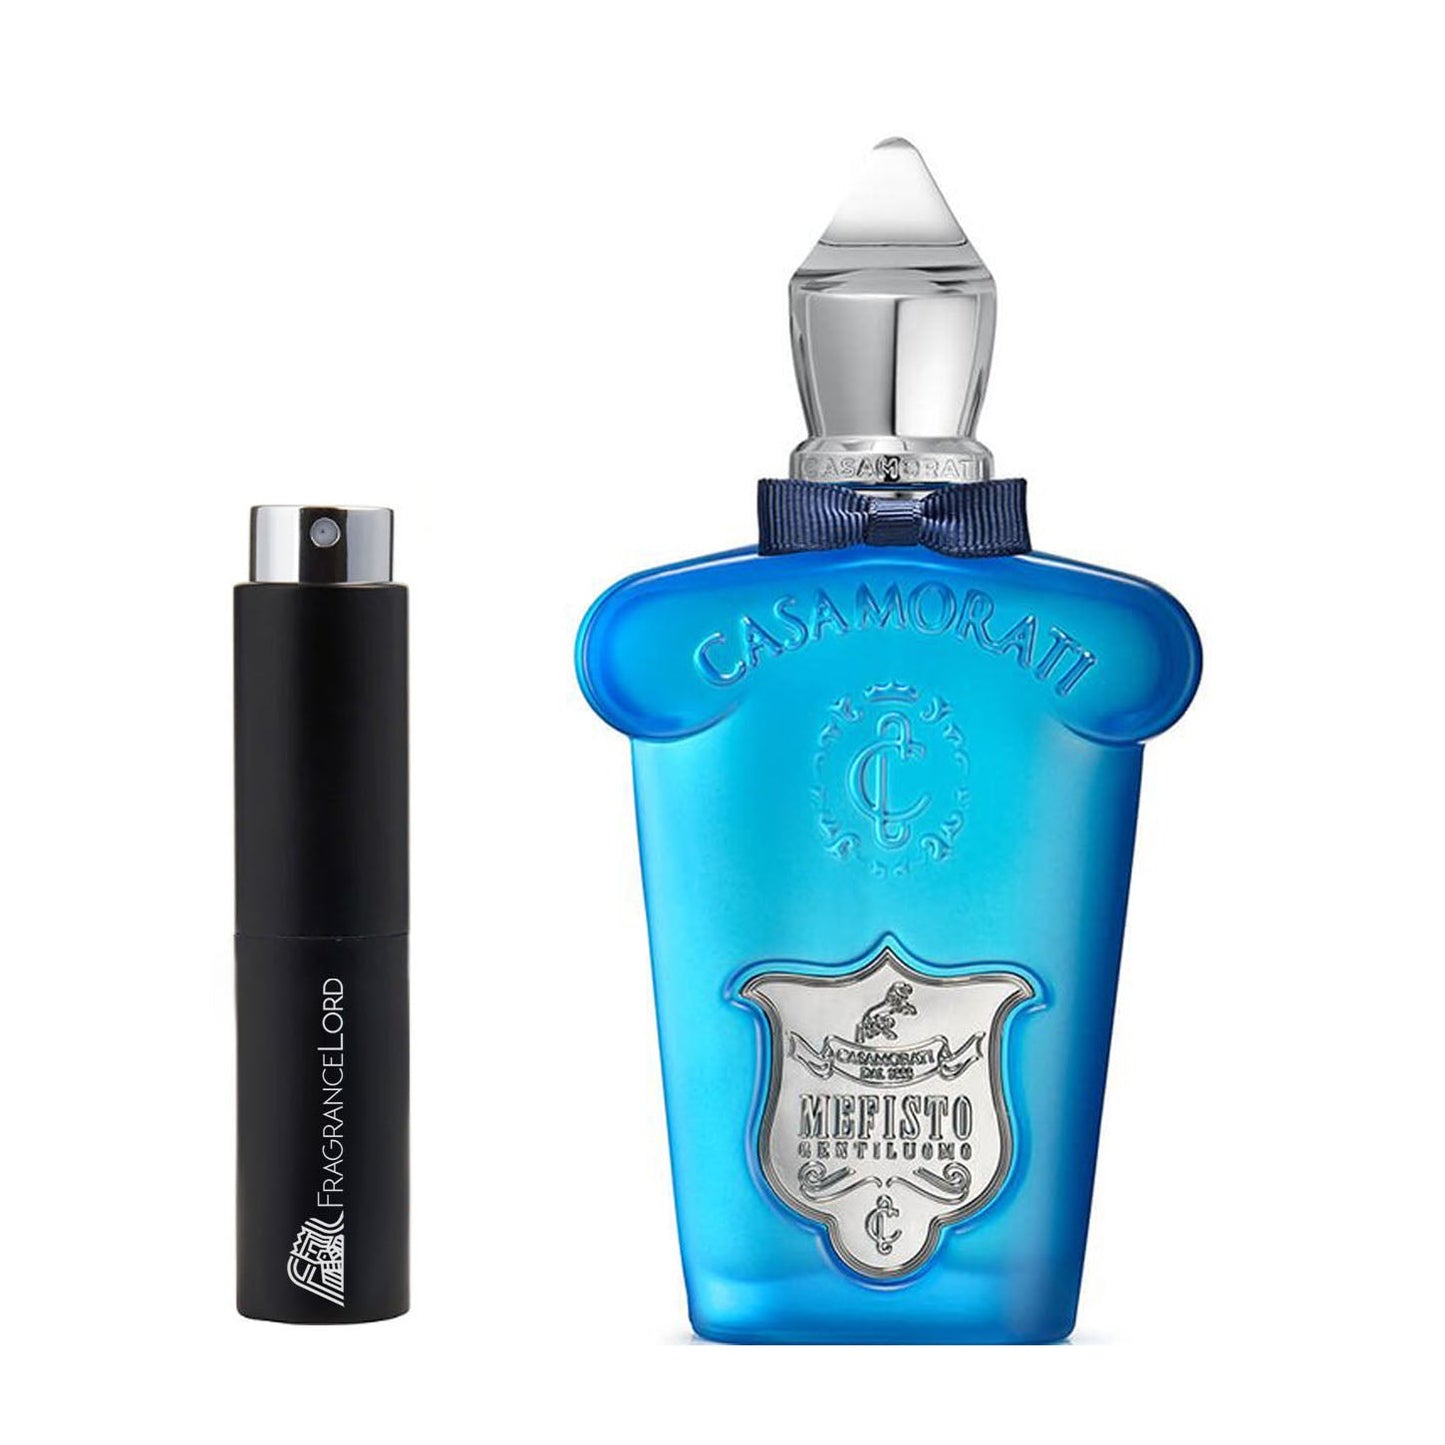 XERJOFF Gentelman Mefisto Eau de Parfum Travel Size Spray - Sample